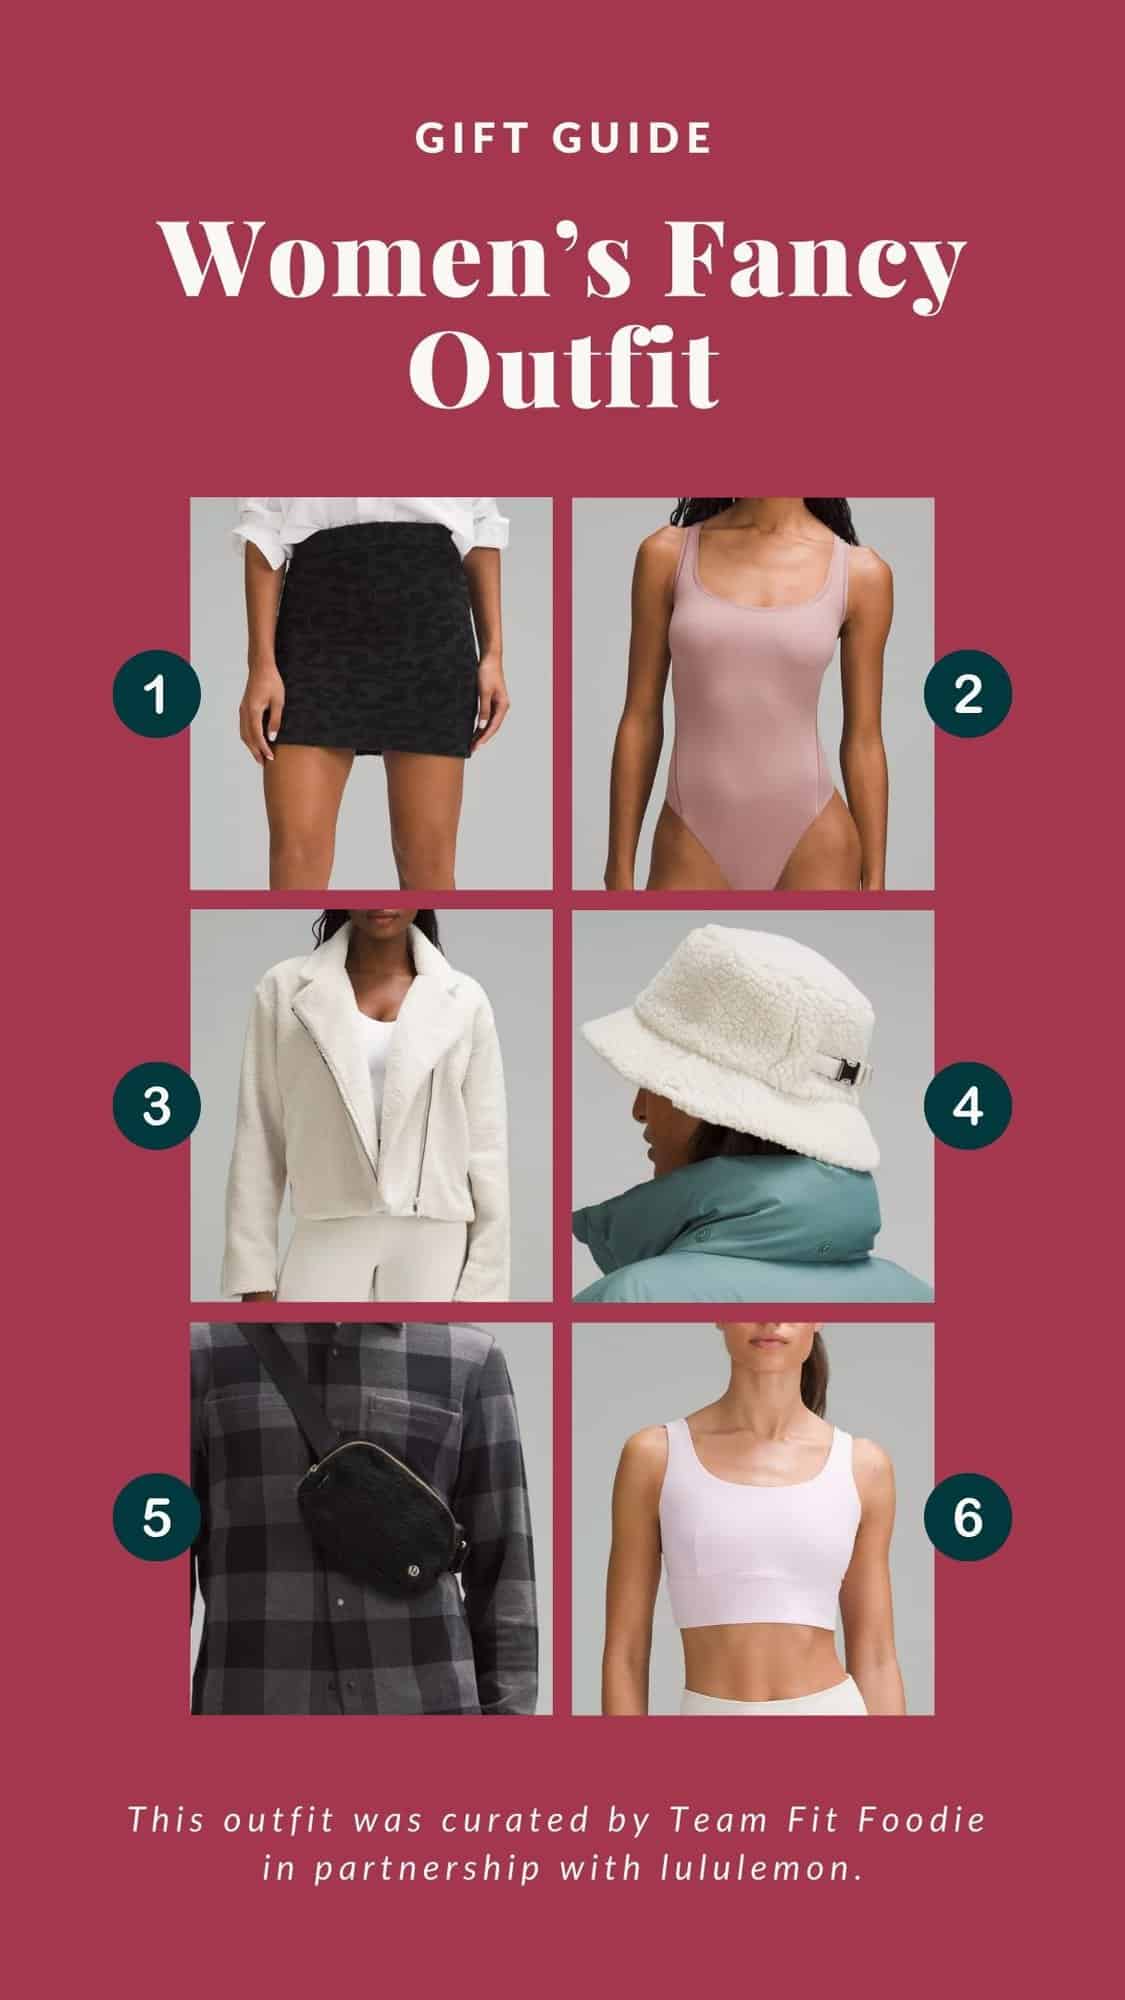 Women's fancy outfit gift guide.